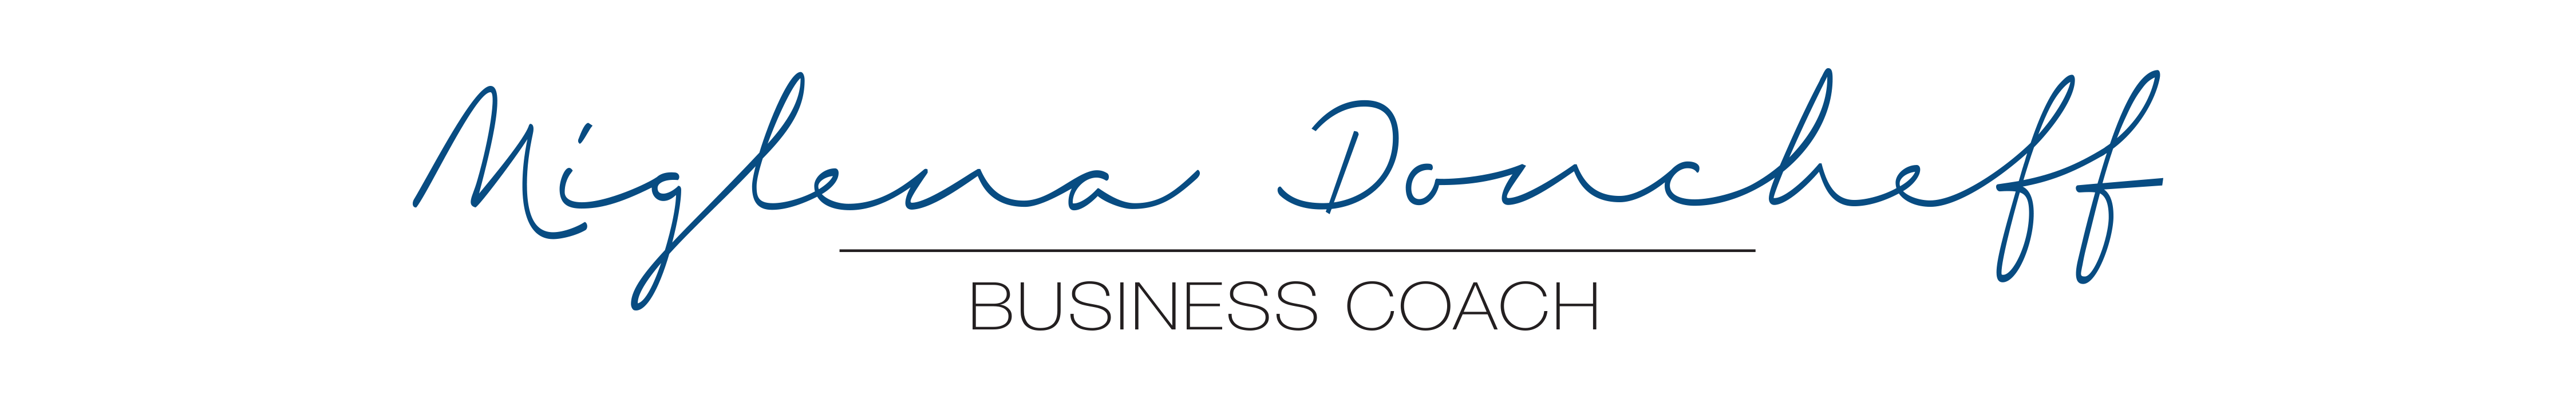 Miglena Doncheff - Logo hand writing